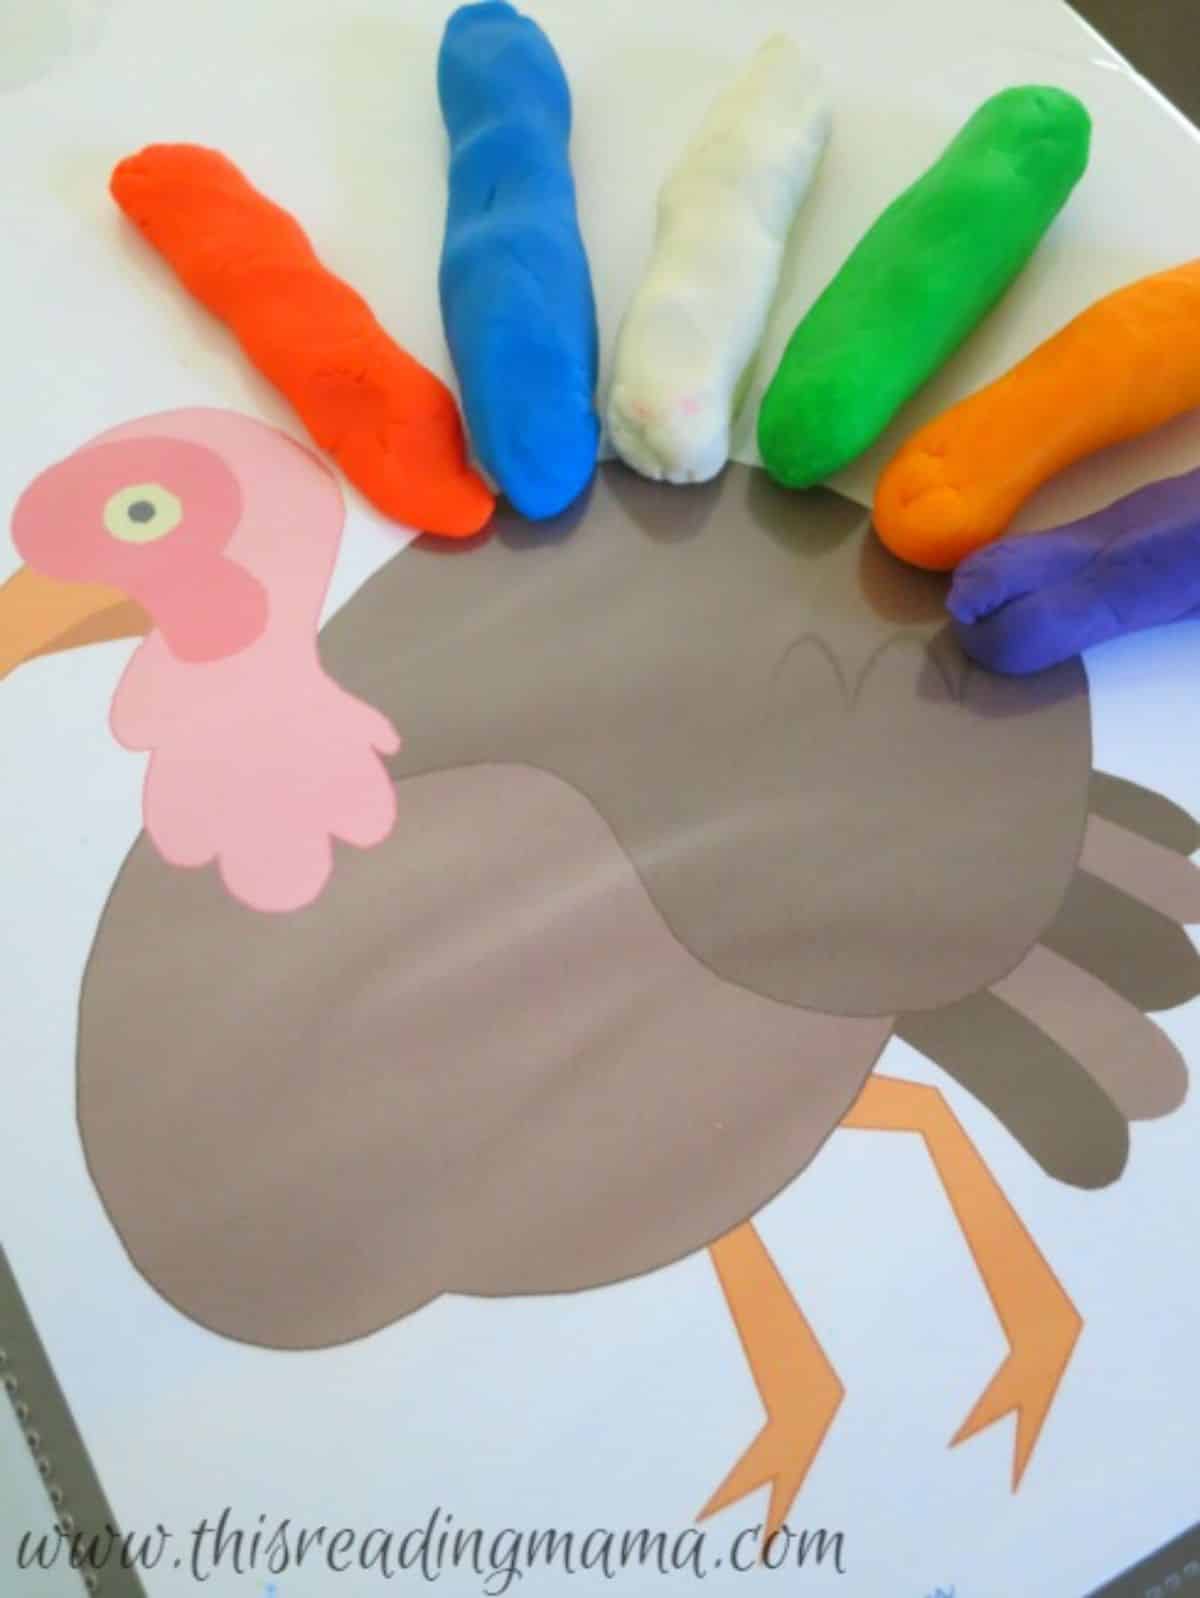 DIfferent colors of playdough on a turkey portrait.